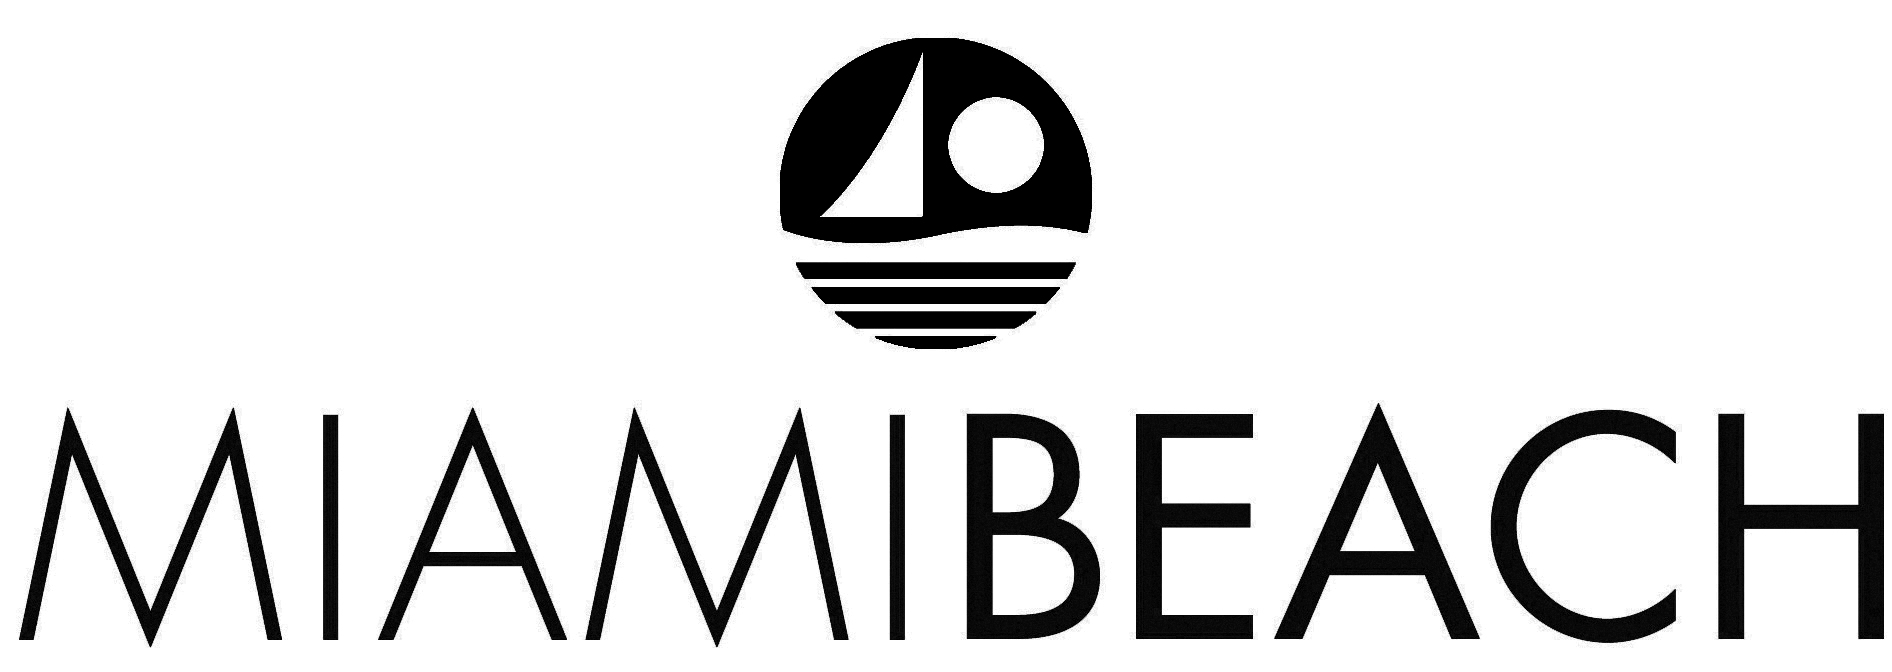 City MiamiBeach Logo1.jpg